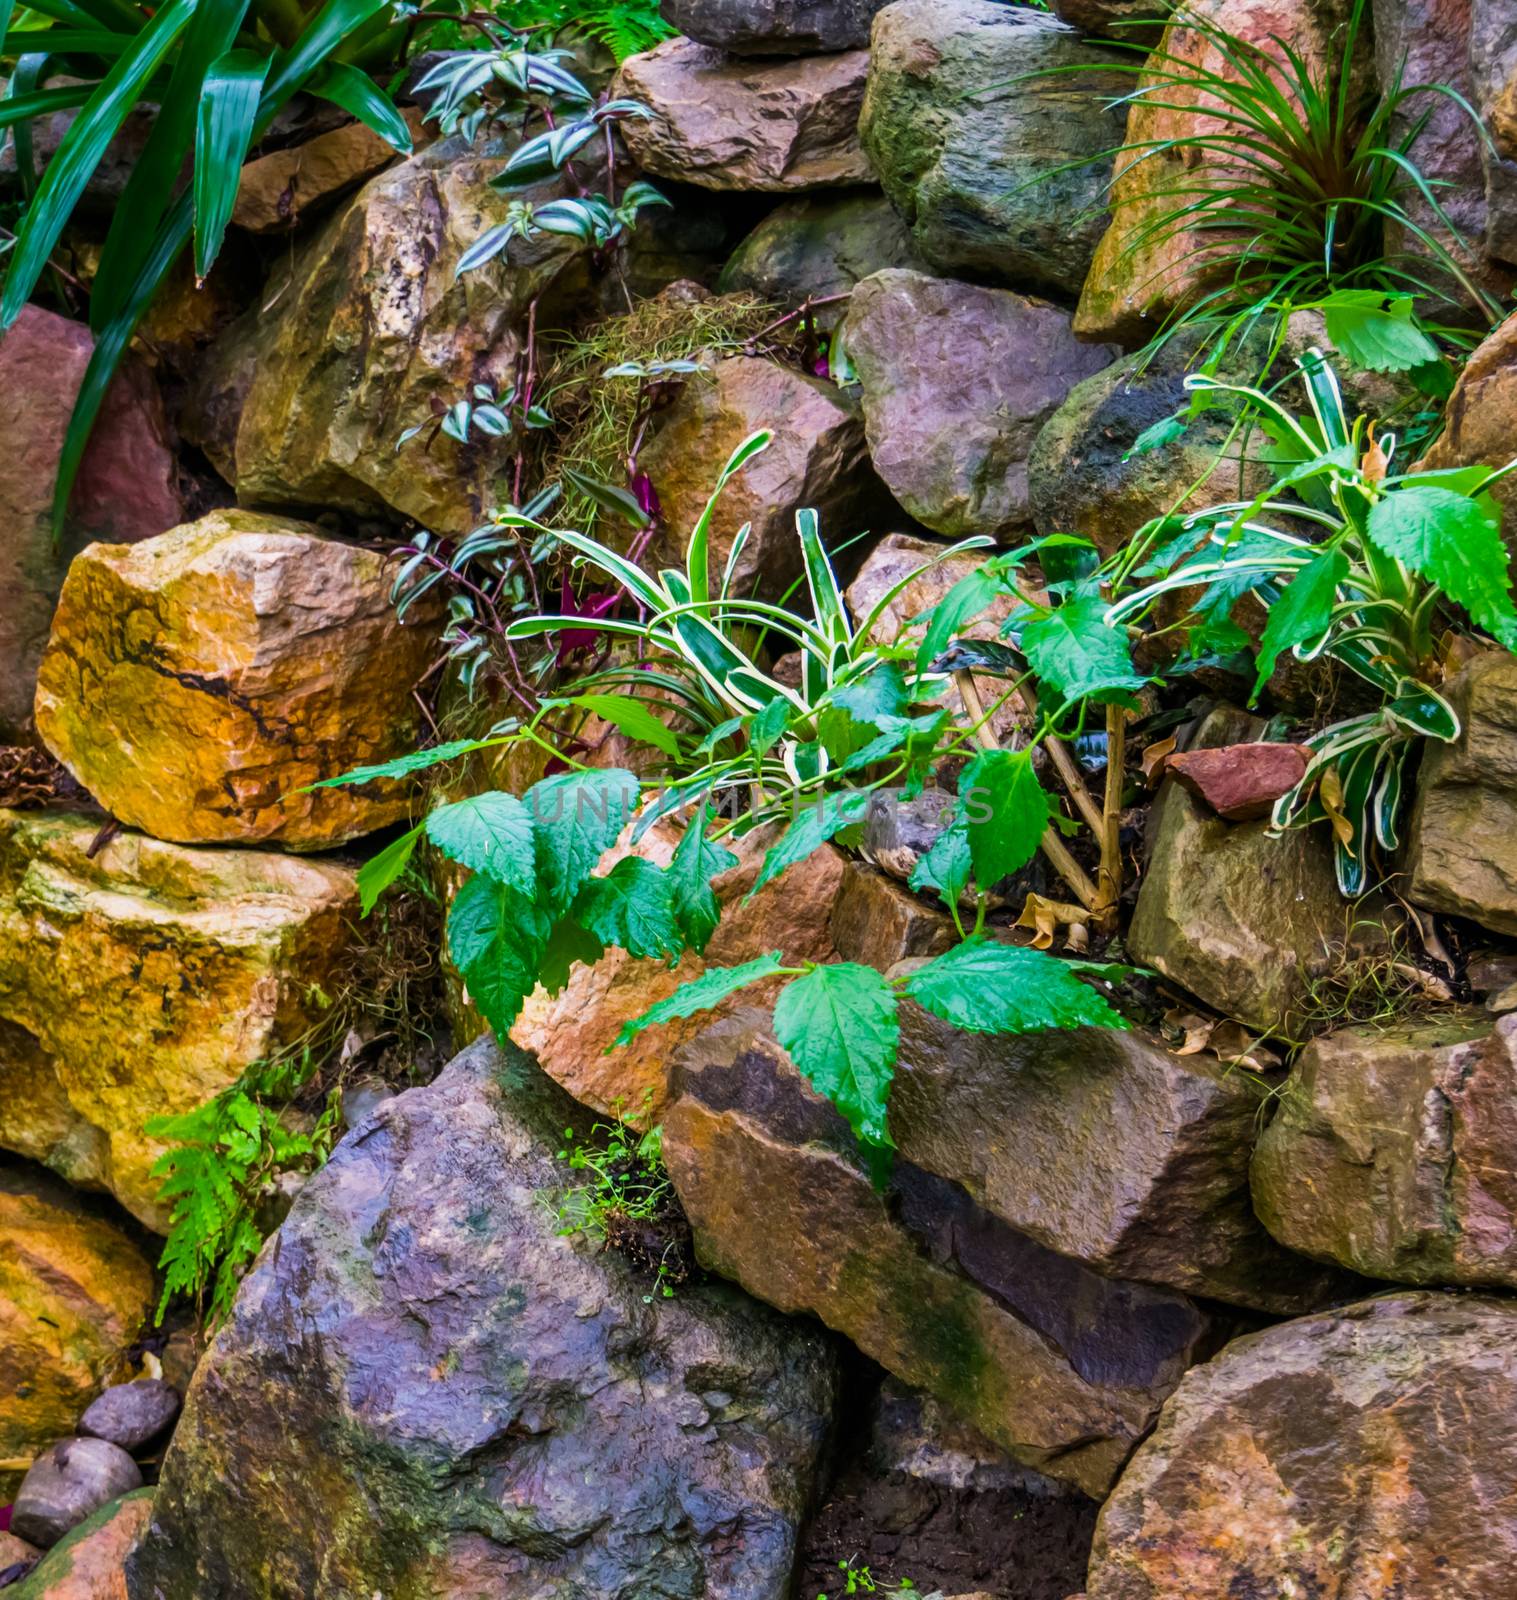 pile of big rocks in a tropical garden, backyard decorations, nature background by charlottebleijenberg